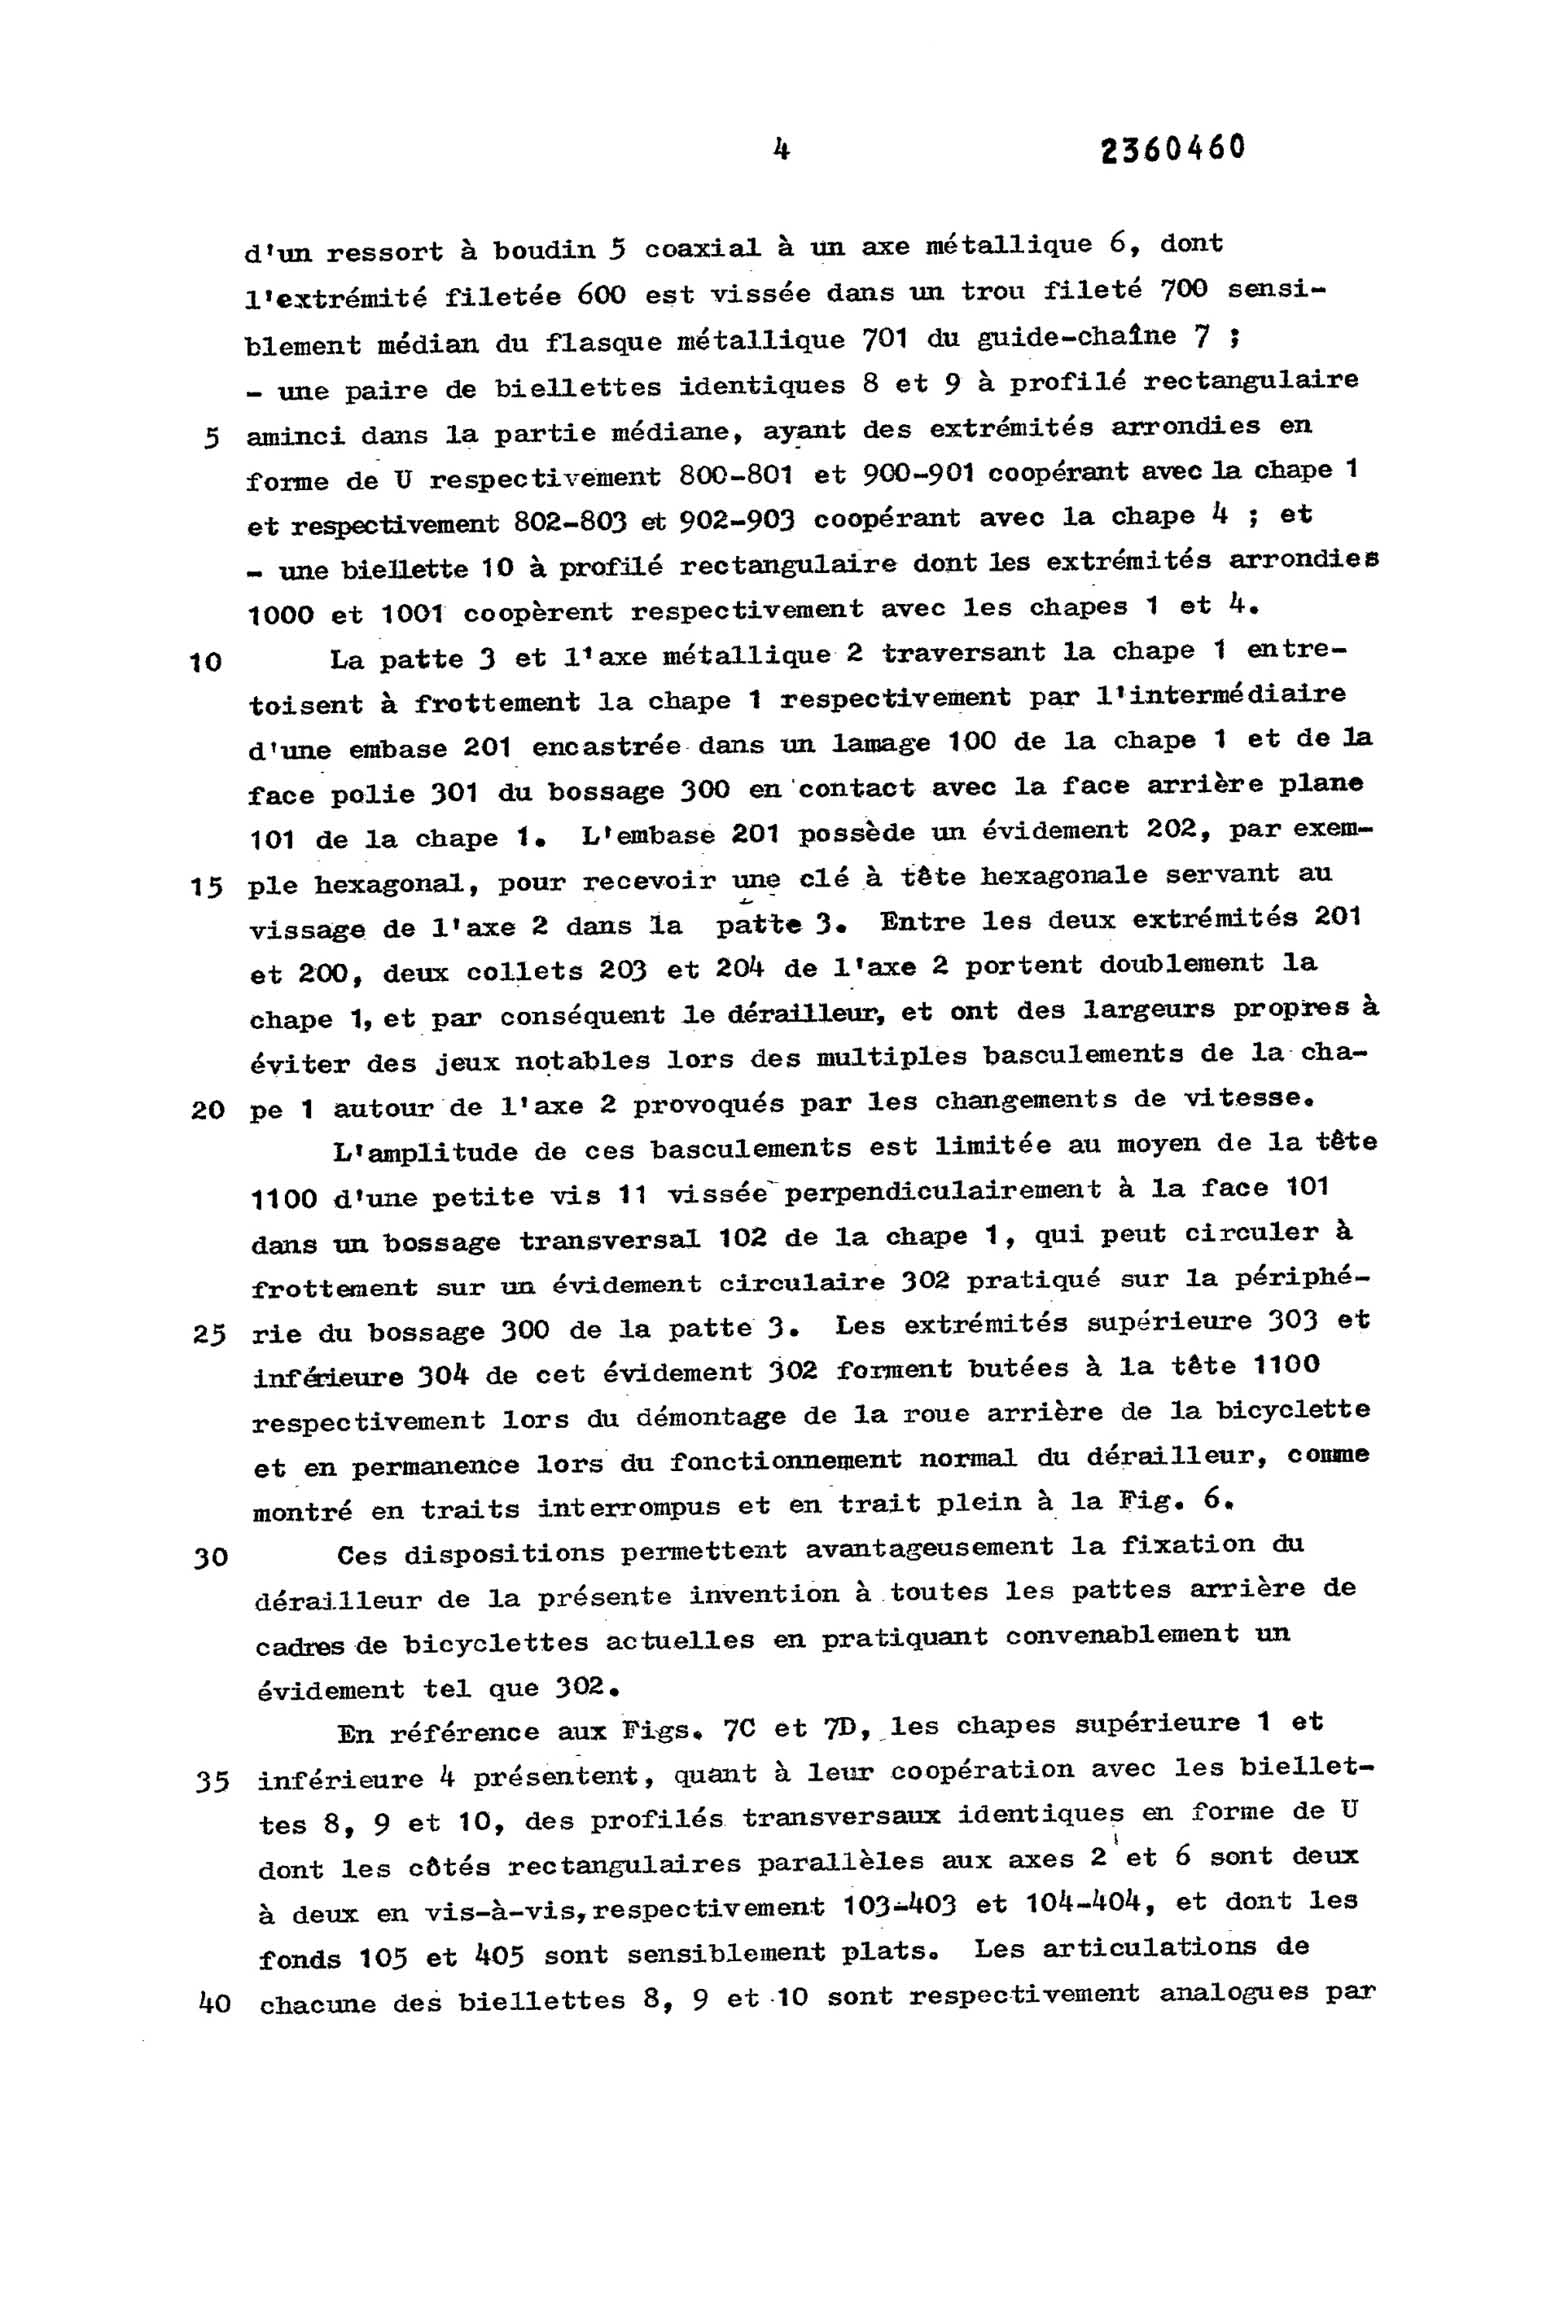 French Patent 2,360,460 - MAVIC scan 05 main image